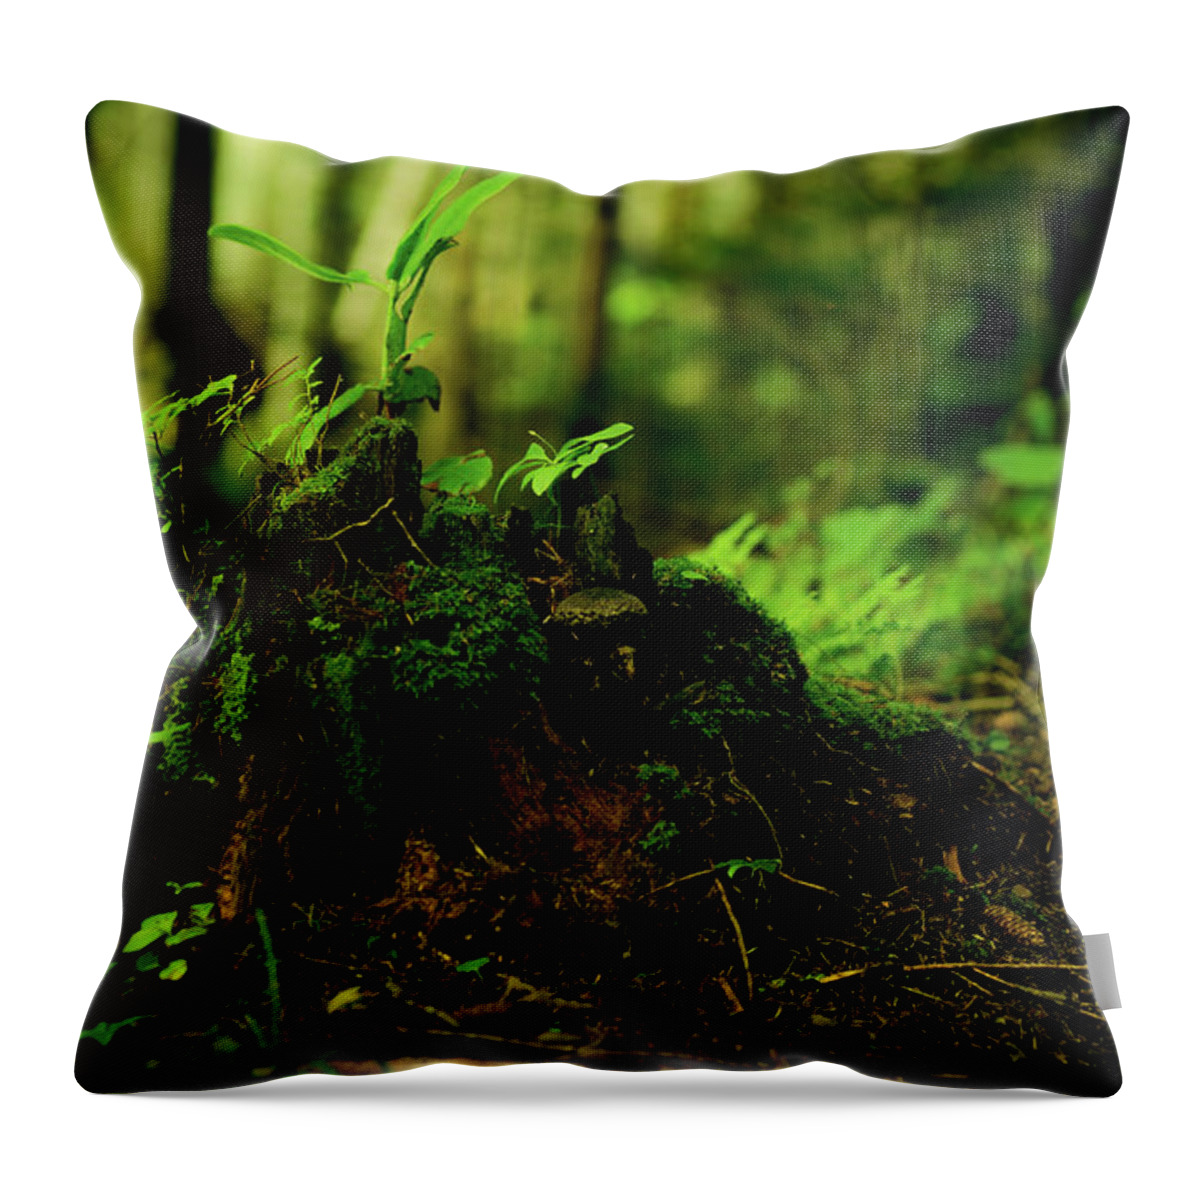 Hokkaido Throw Pillow featuring the photograph Leaf Bud by Plasticboystudio